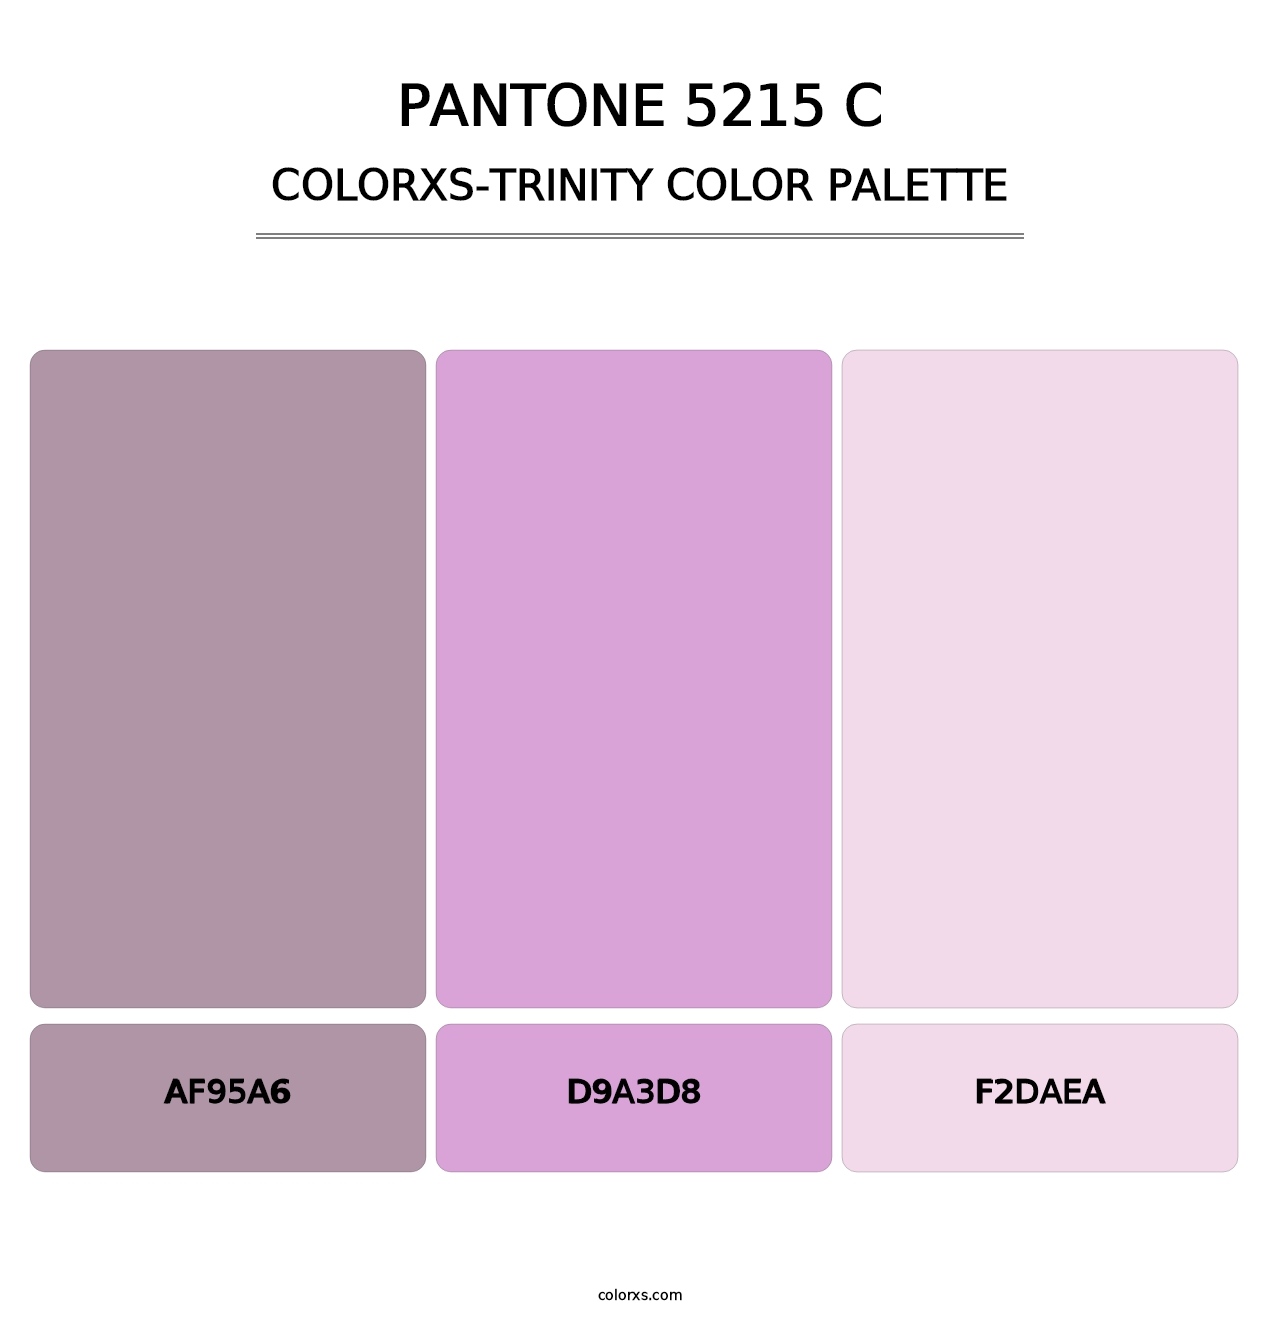 PANTONE 5215 C - Colorxs Trinity Palette